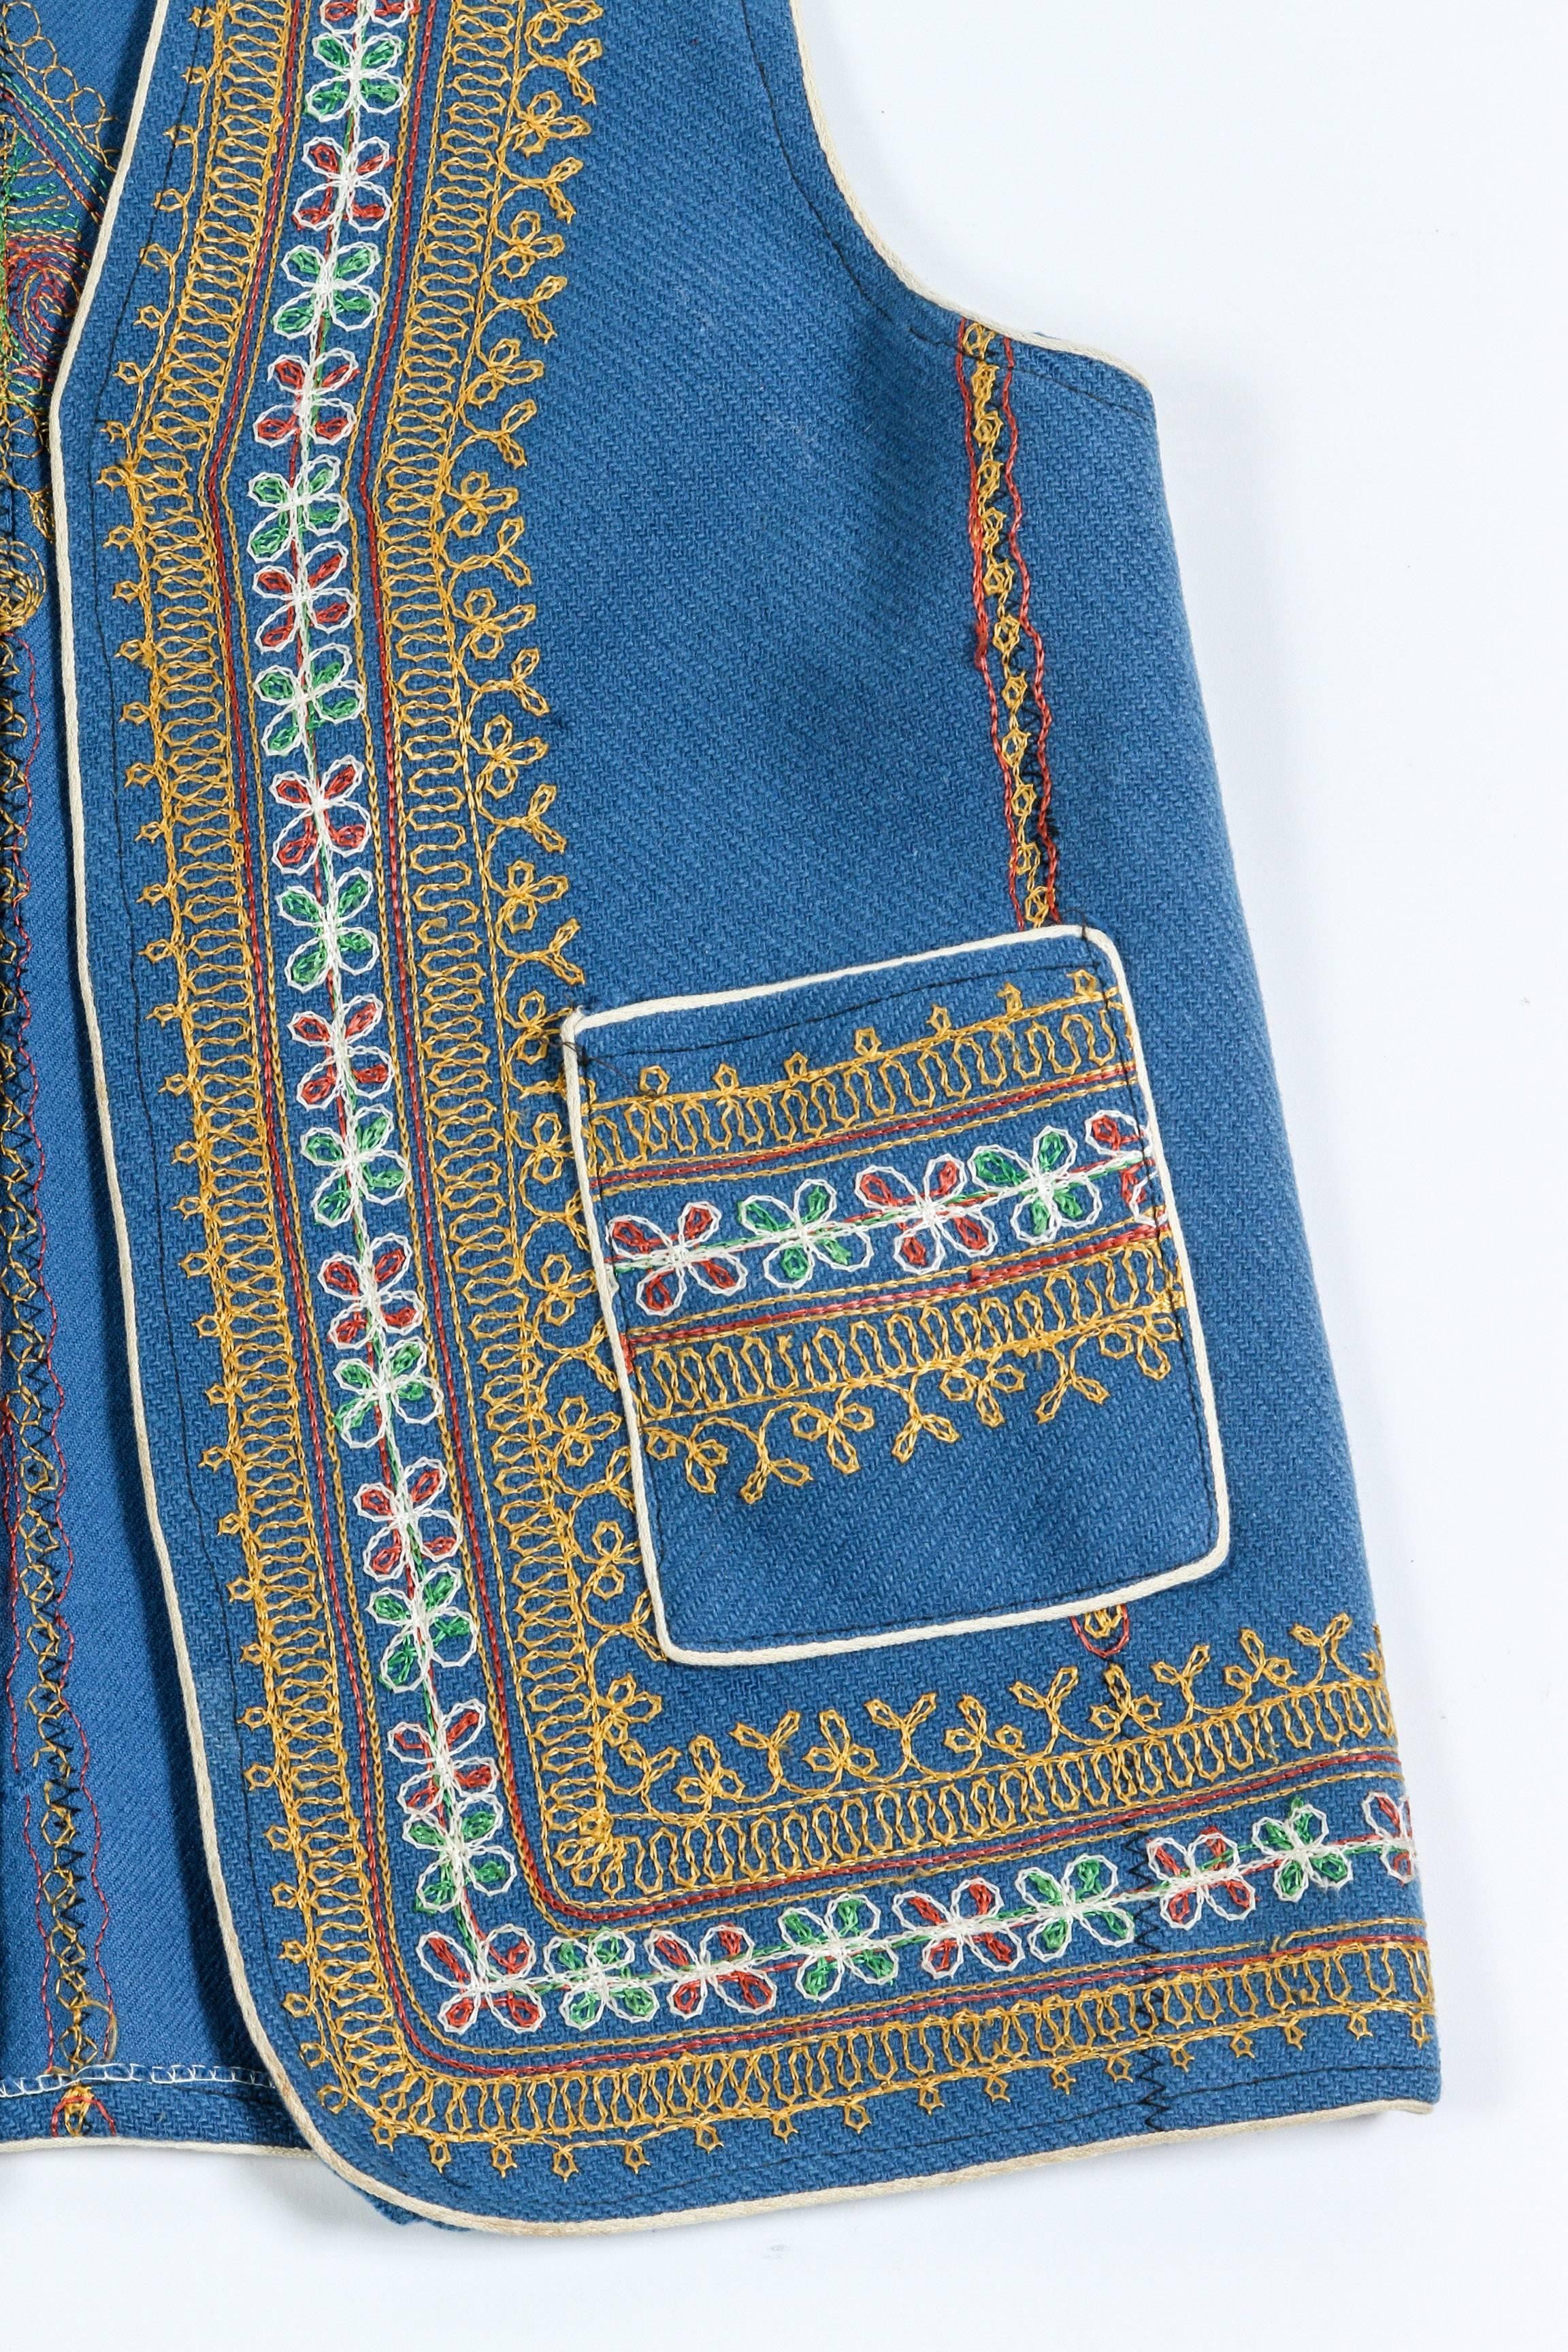 Bleu Gilet ethnique bleu turc vintage en vente